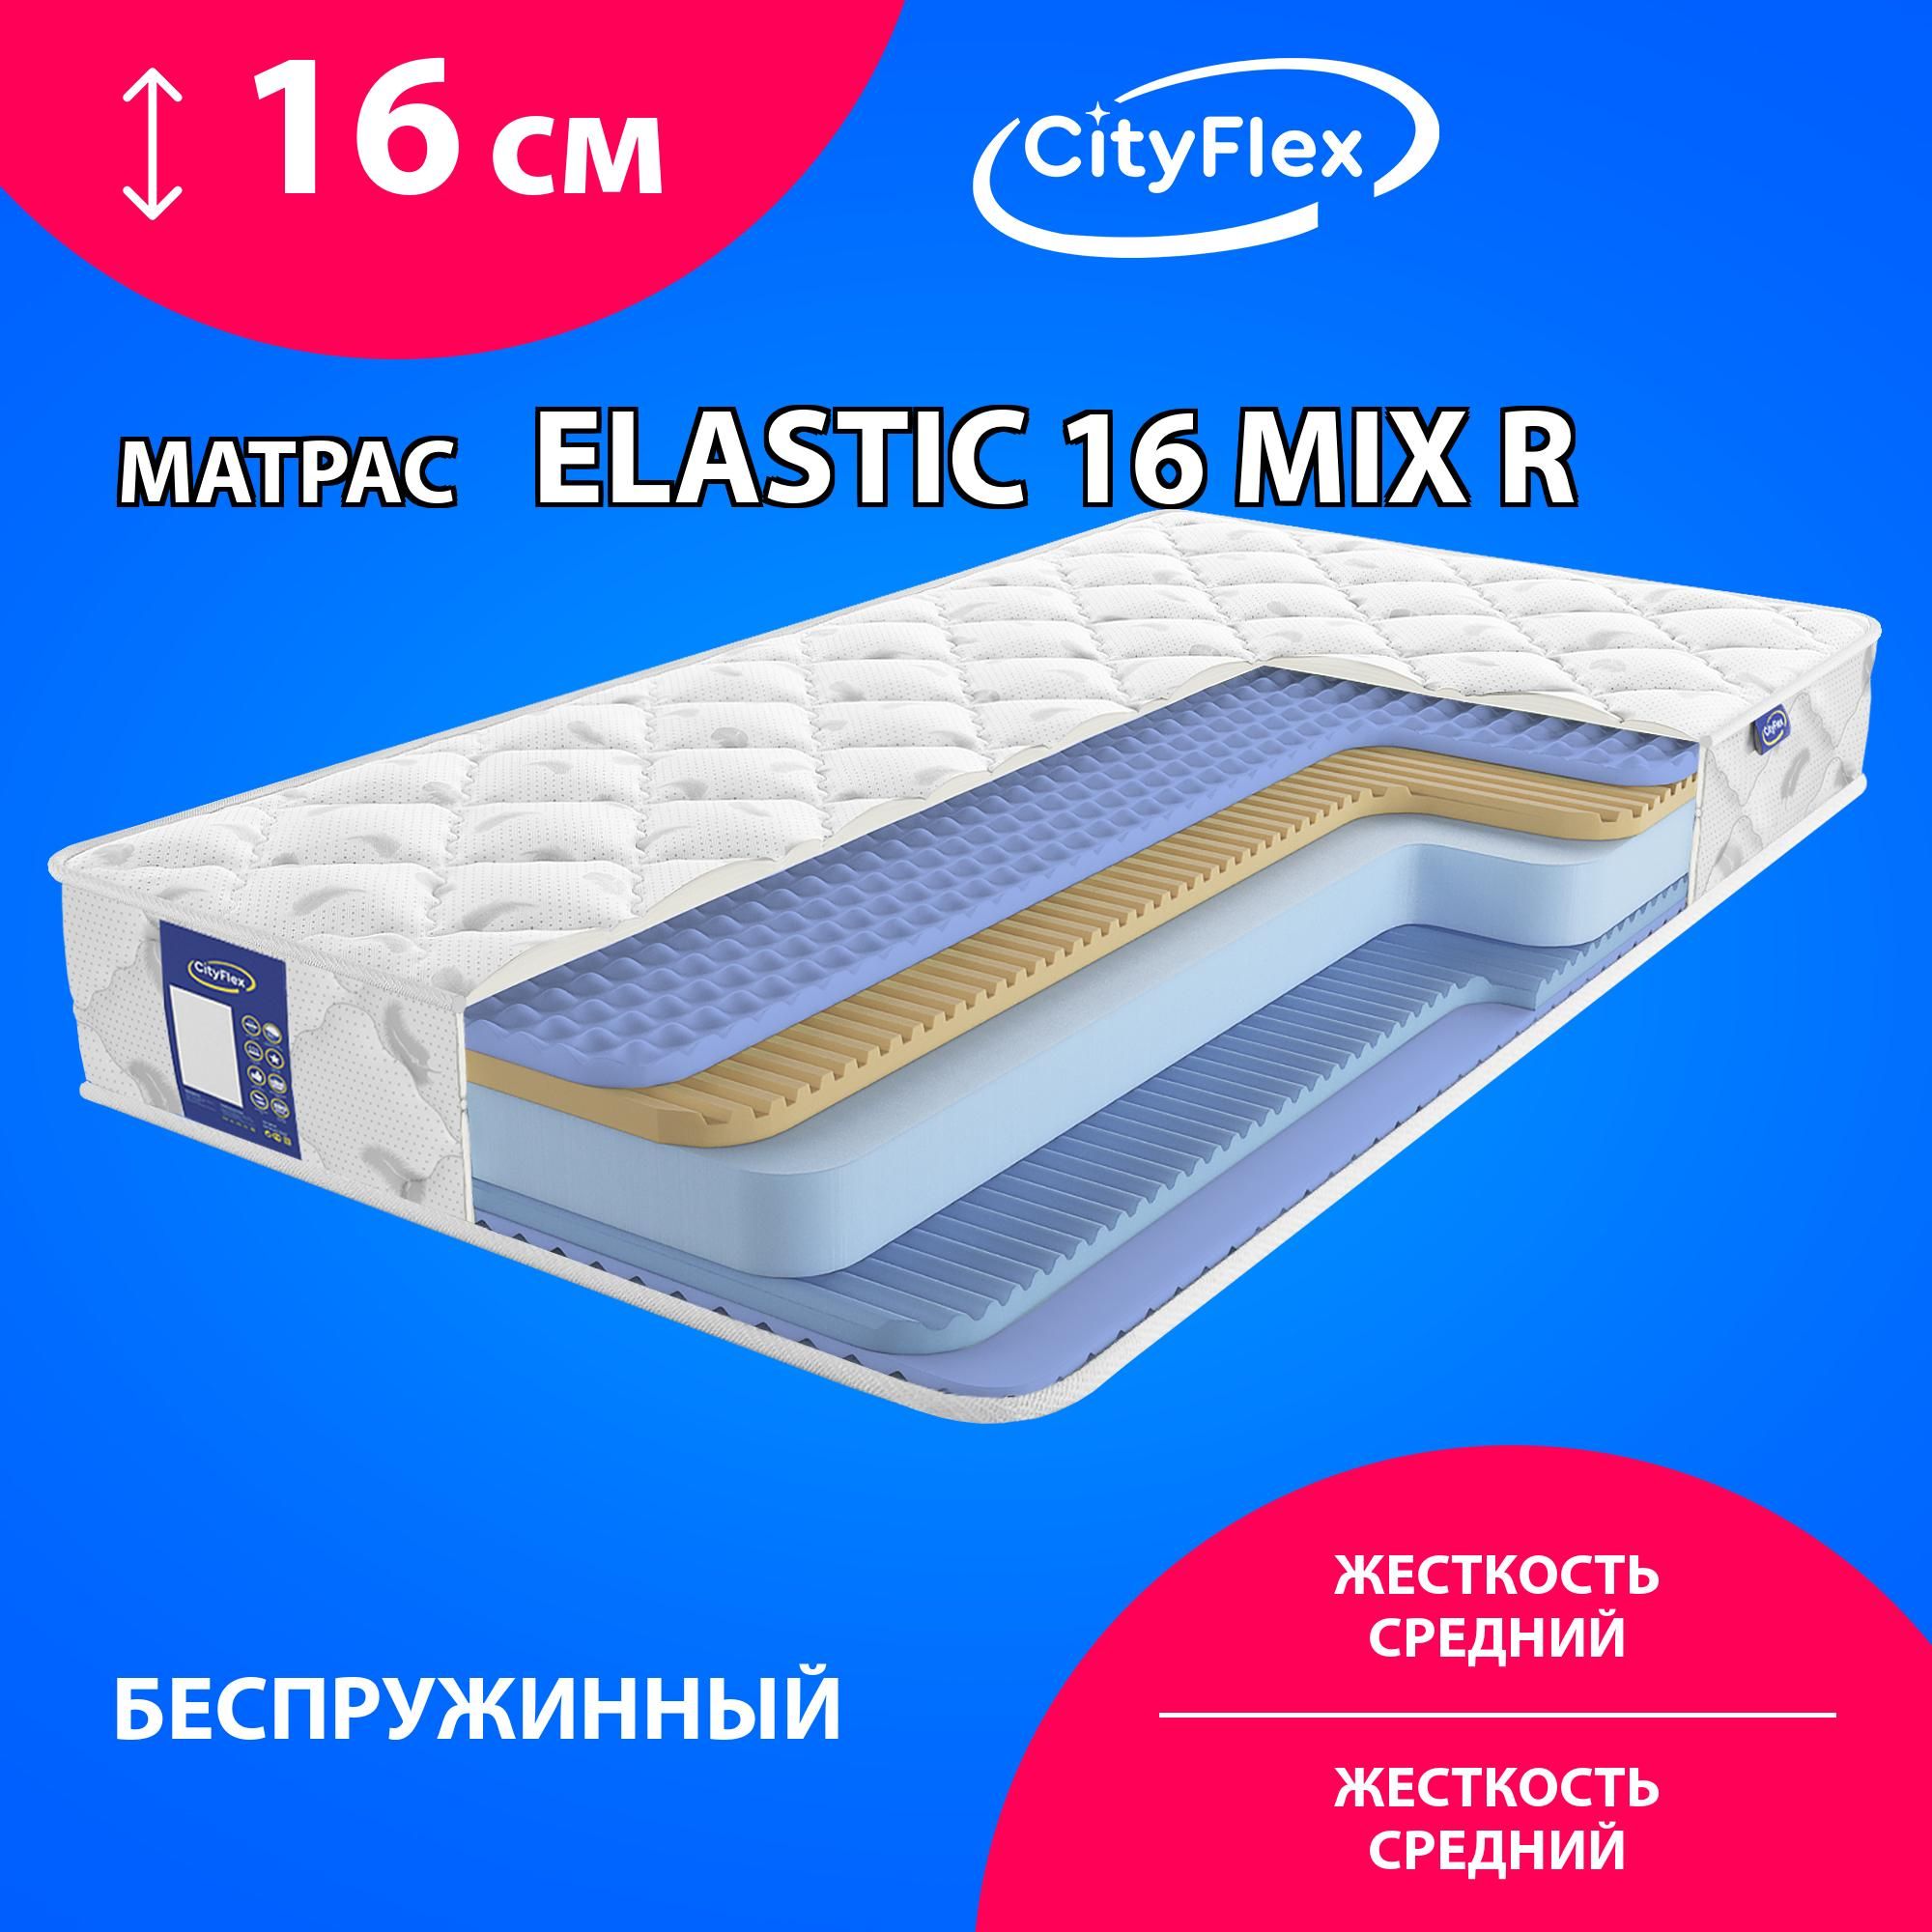 МатрасCityFlexElastic16mixR,Беспружинный,160х200см